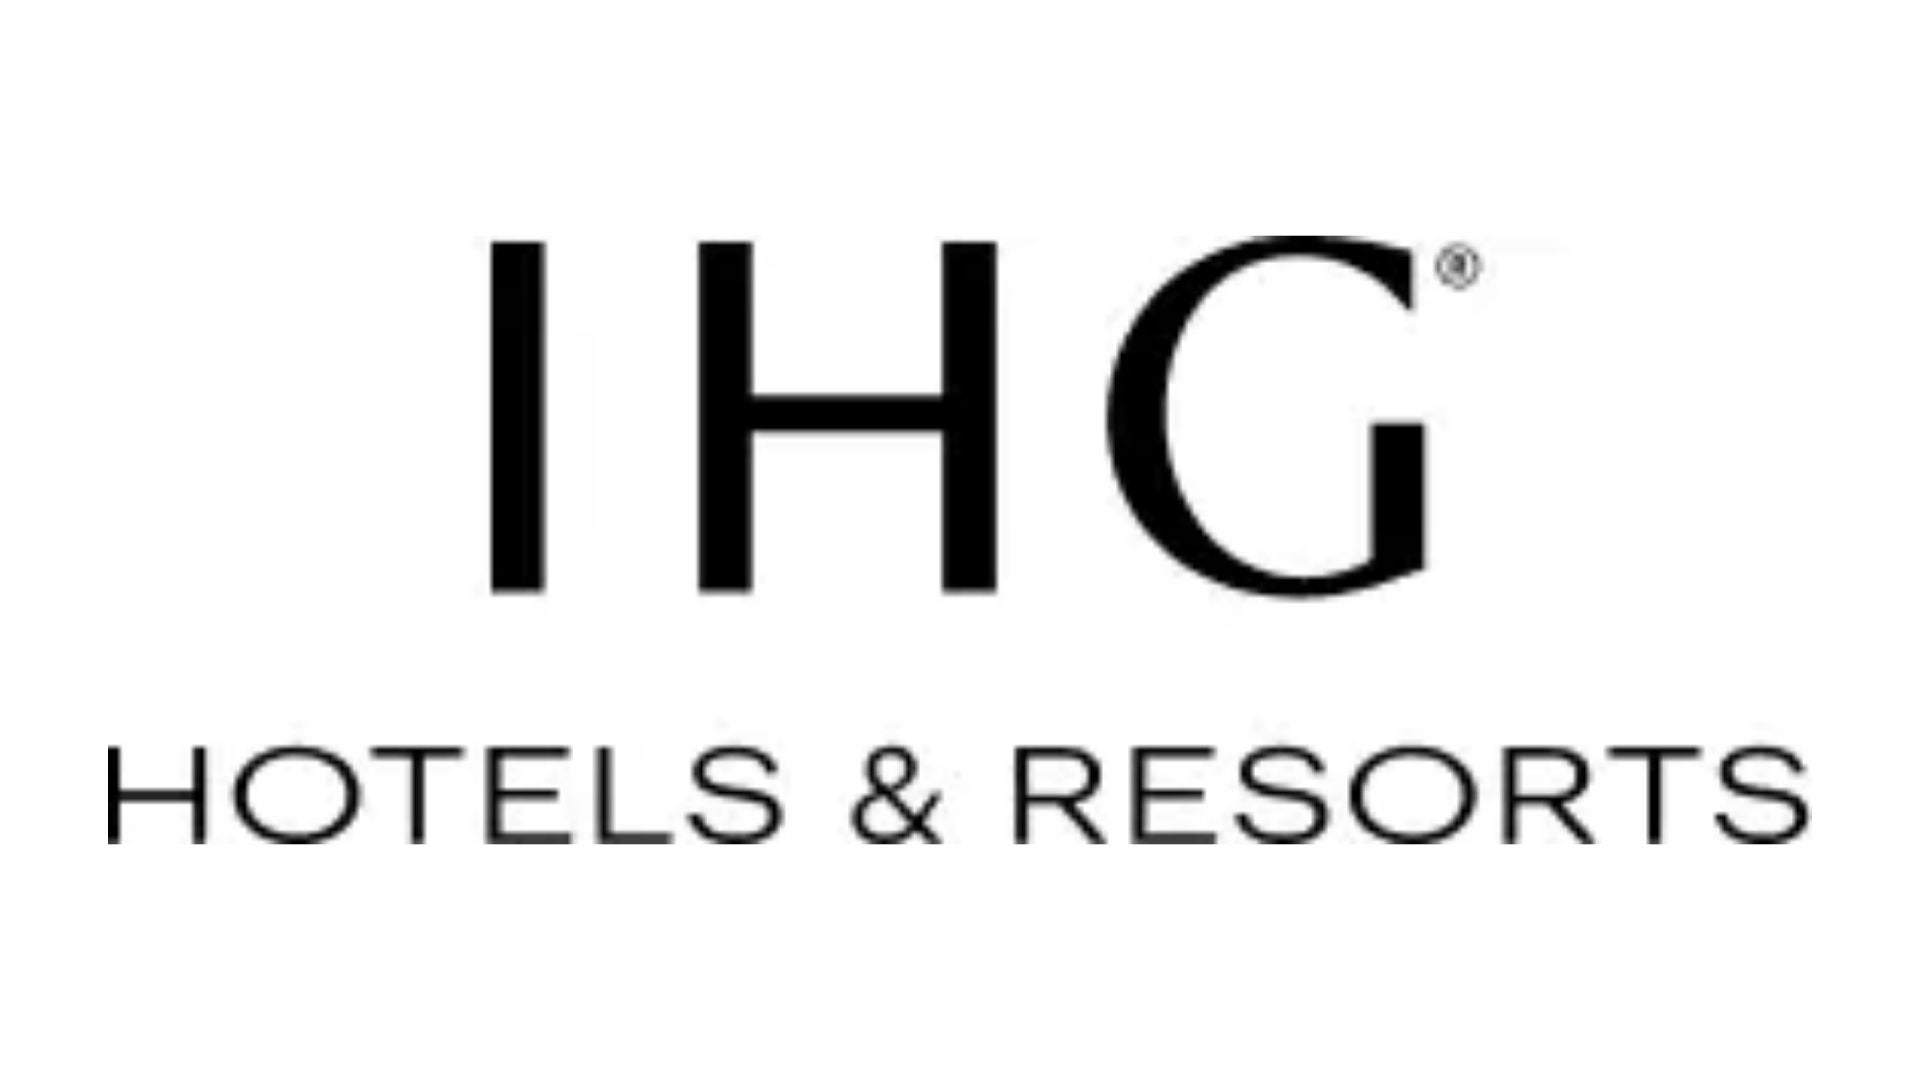 IHG Hotels and Resorts